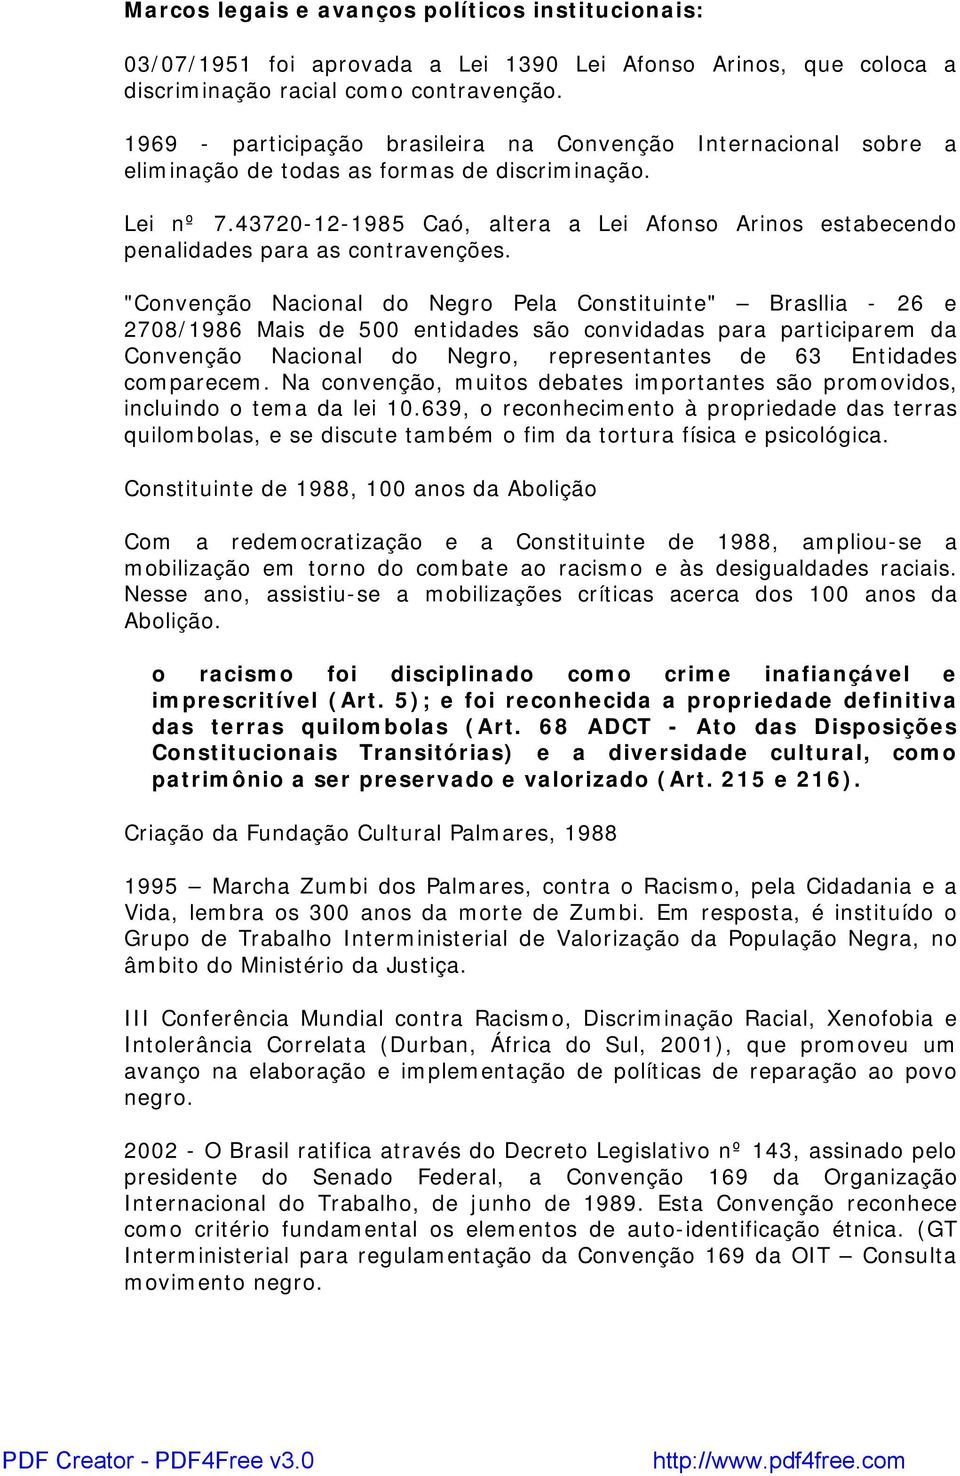 43720-12-1985 Caó, altera a Lei Afonso Arinos estabecendo penalidades para as contravenções.